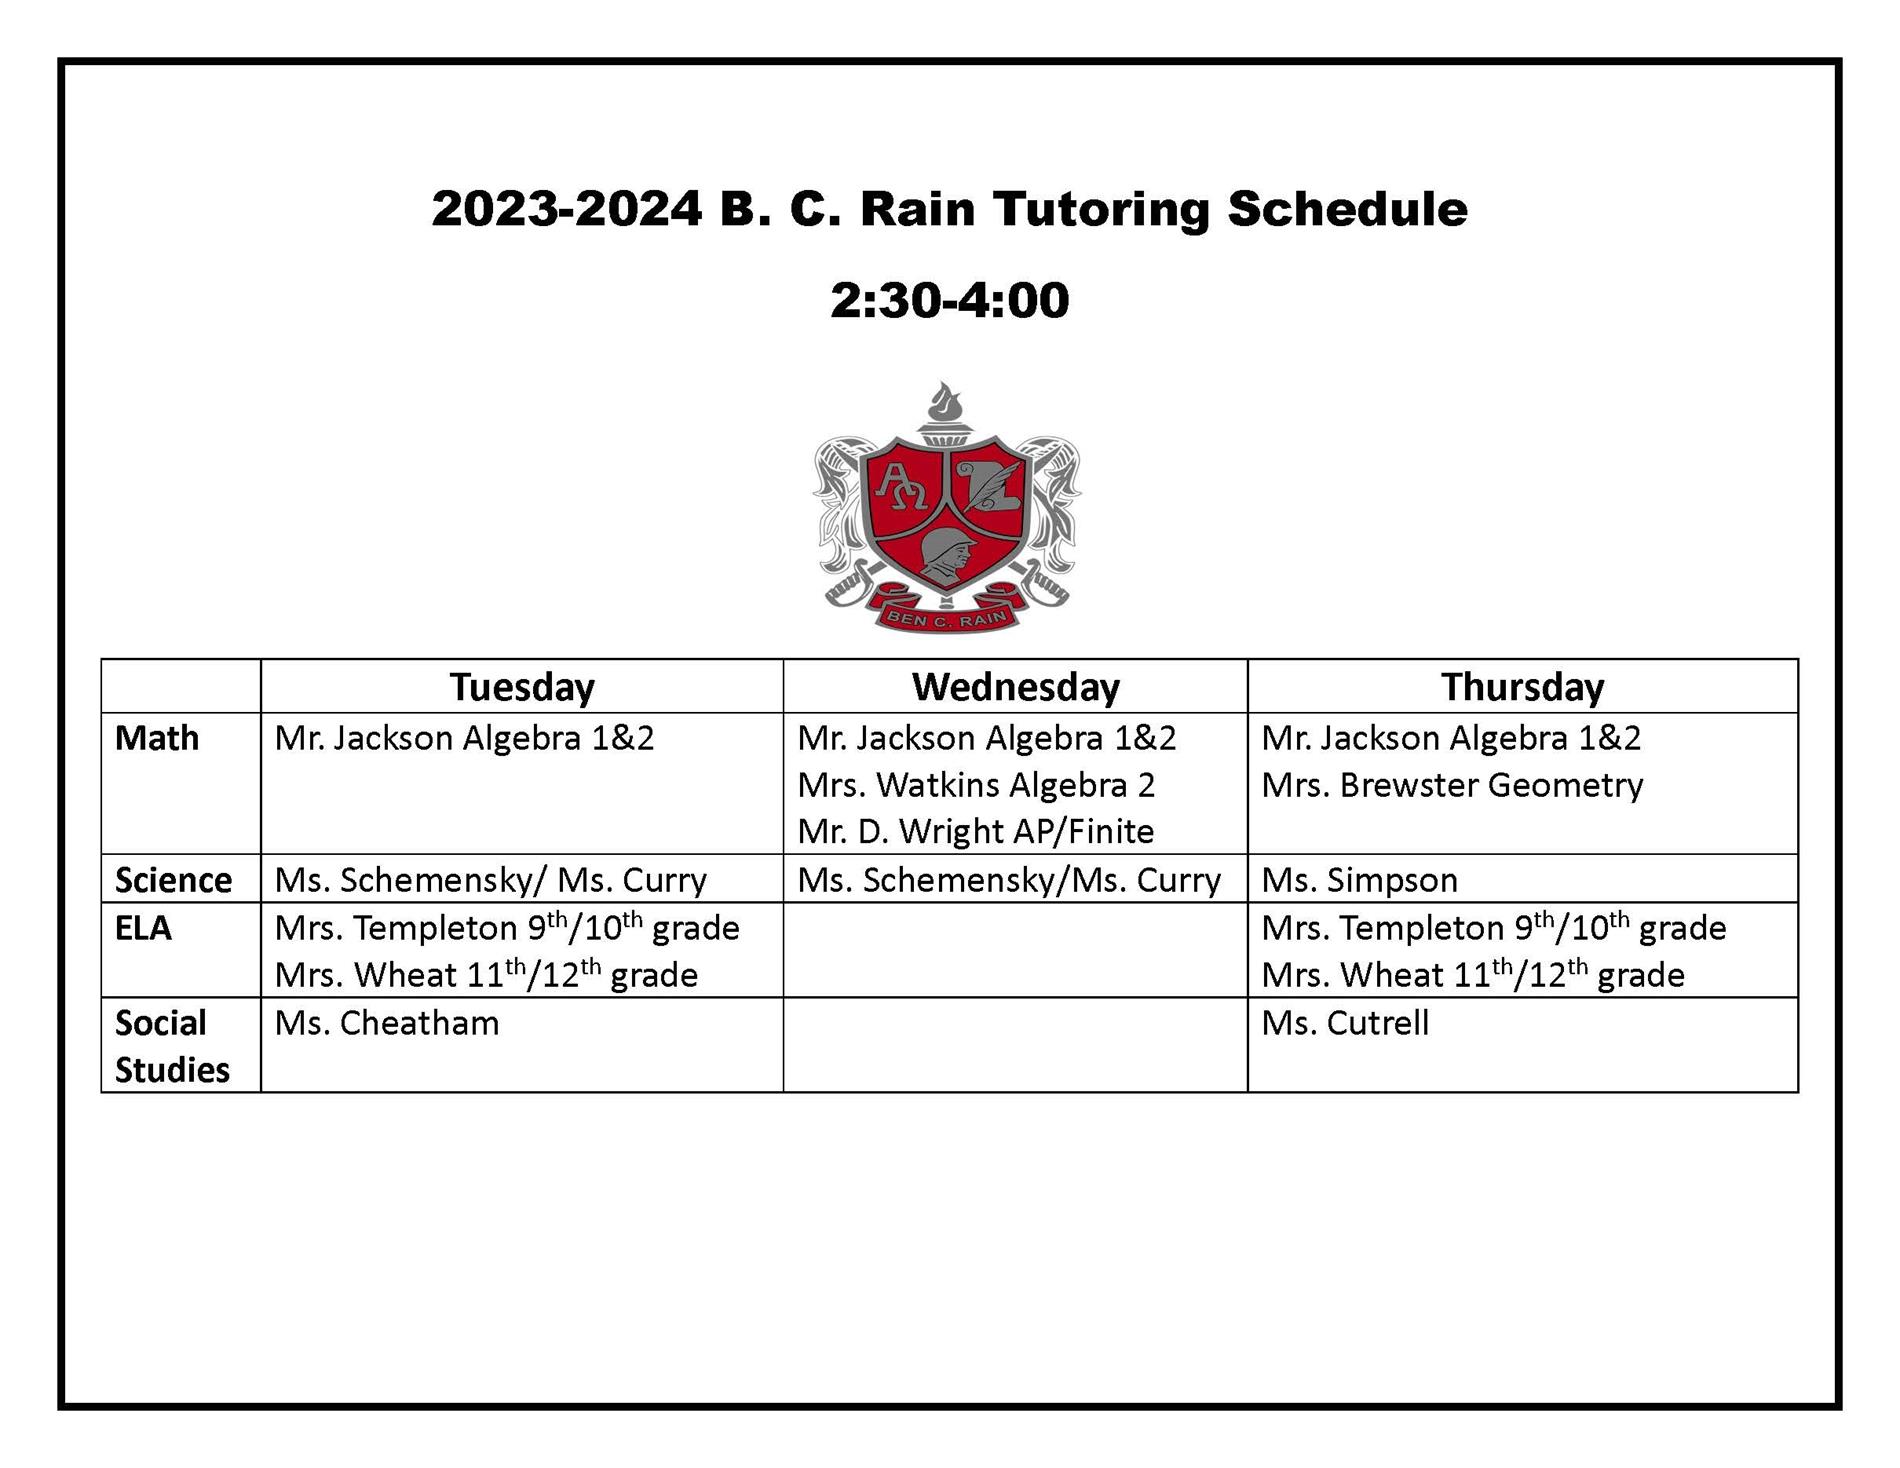 2023-2024 tutoring schedule